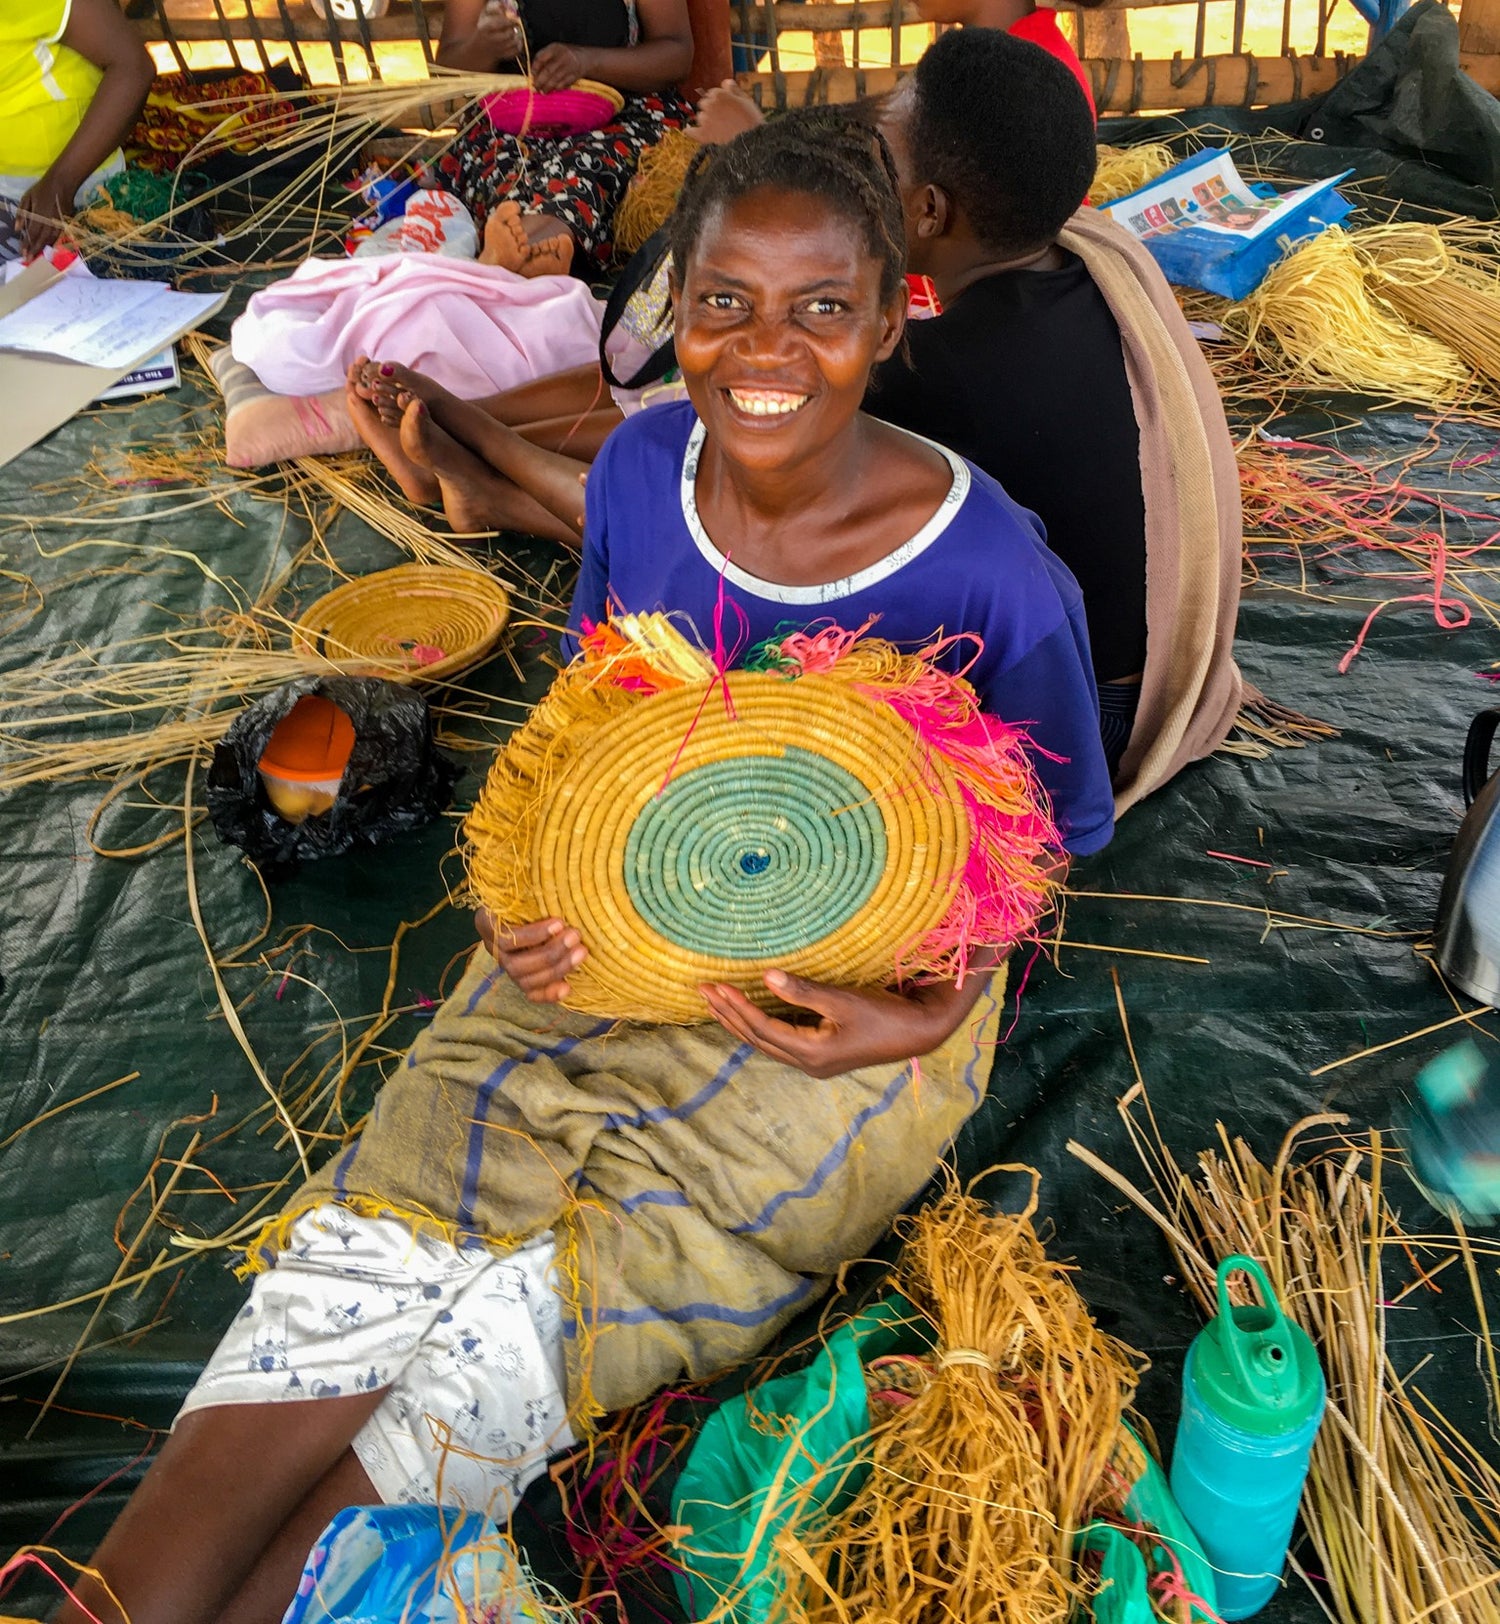 Uganda lady smiling sitting on floor with woven basket